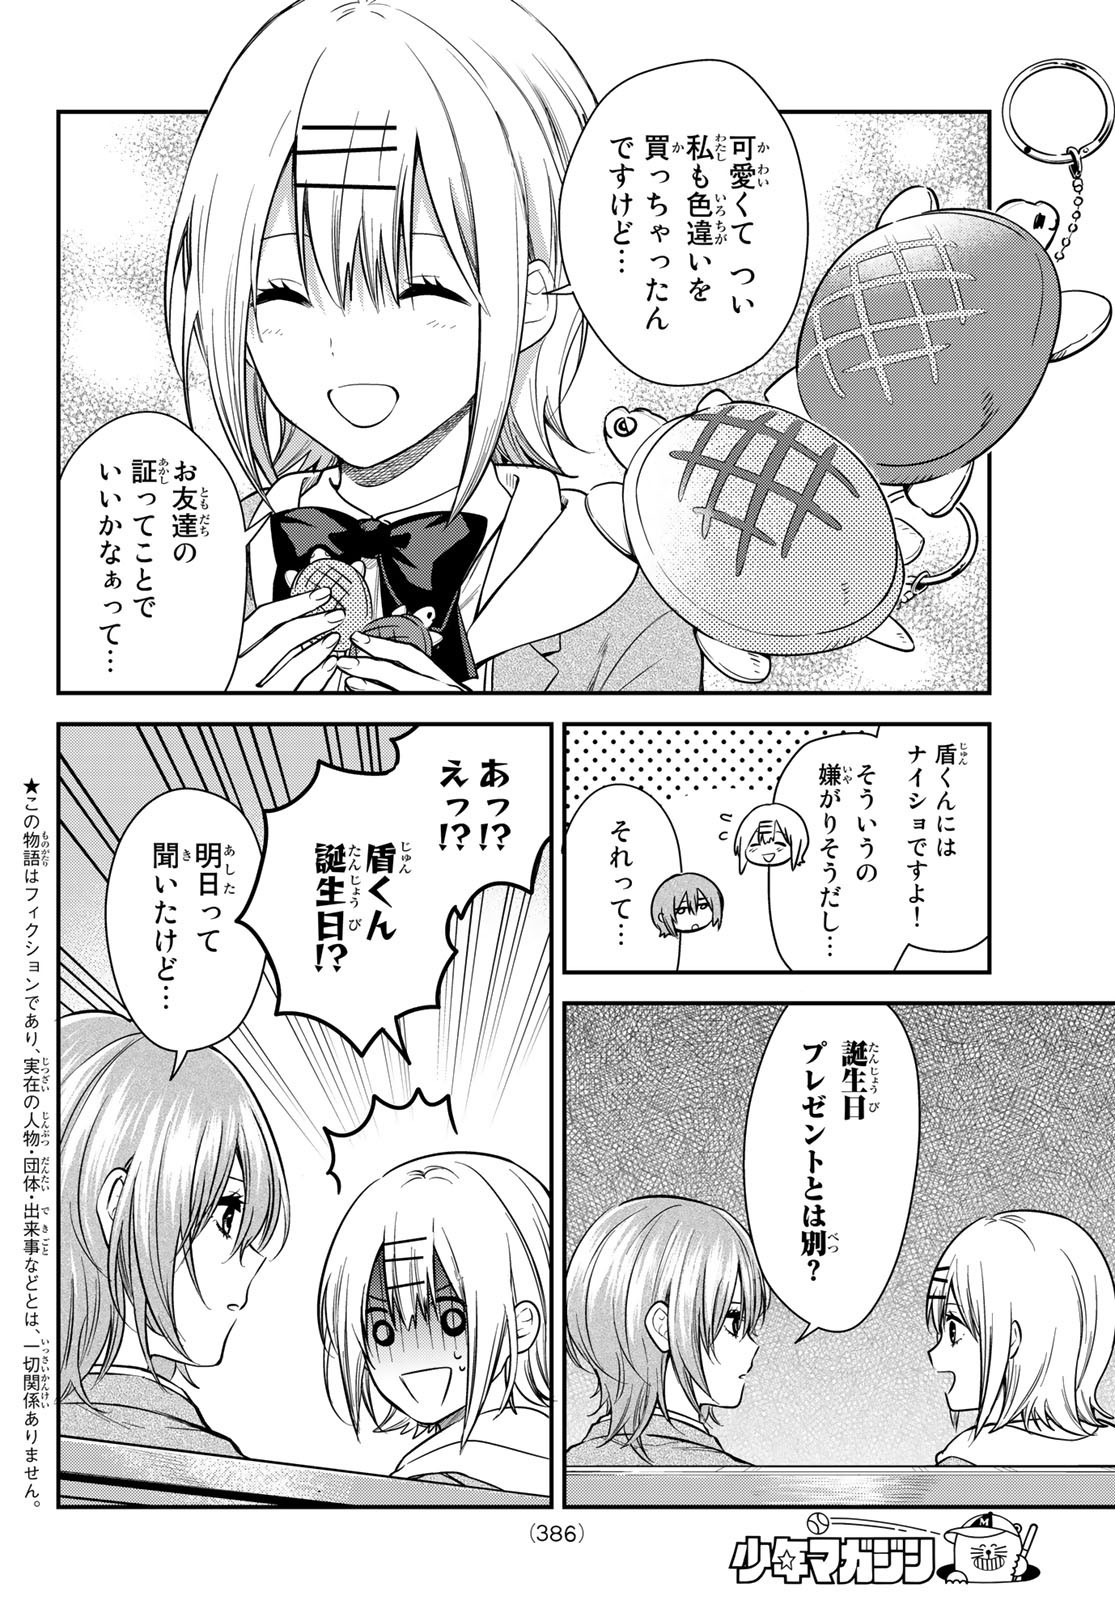 Kimi ga Megami Nara Ii no ni (I Wish You Were My Muse) - Chapter 024 - Page 2